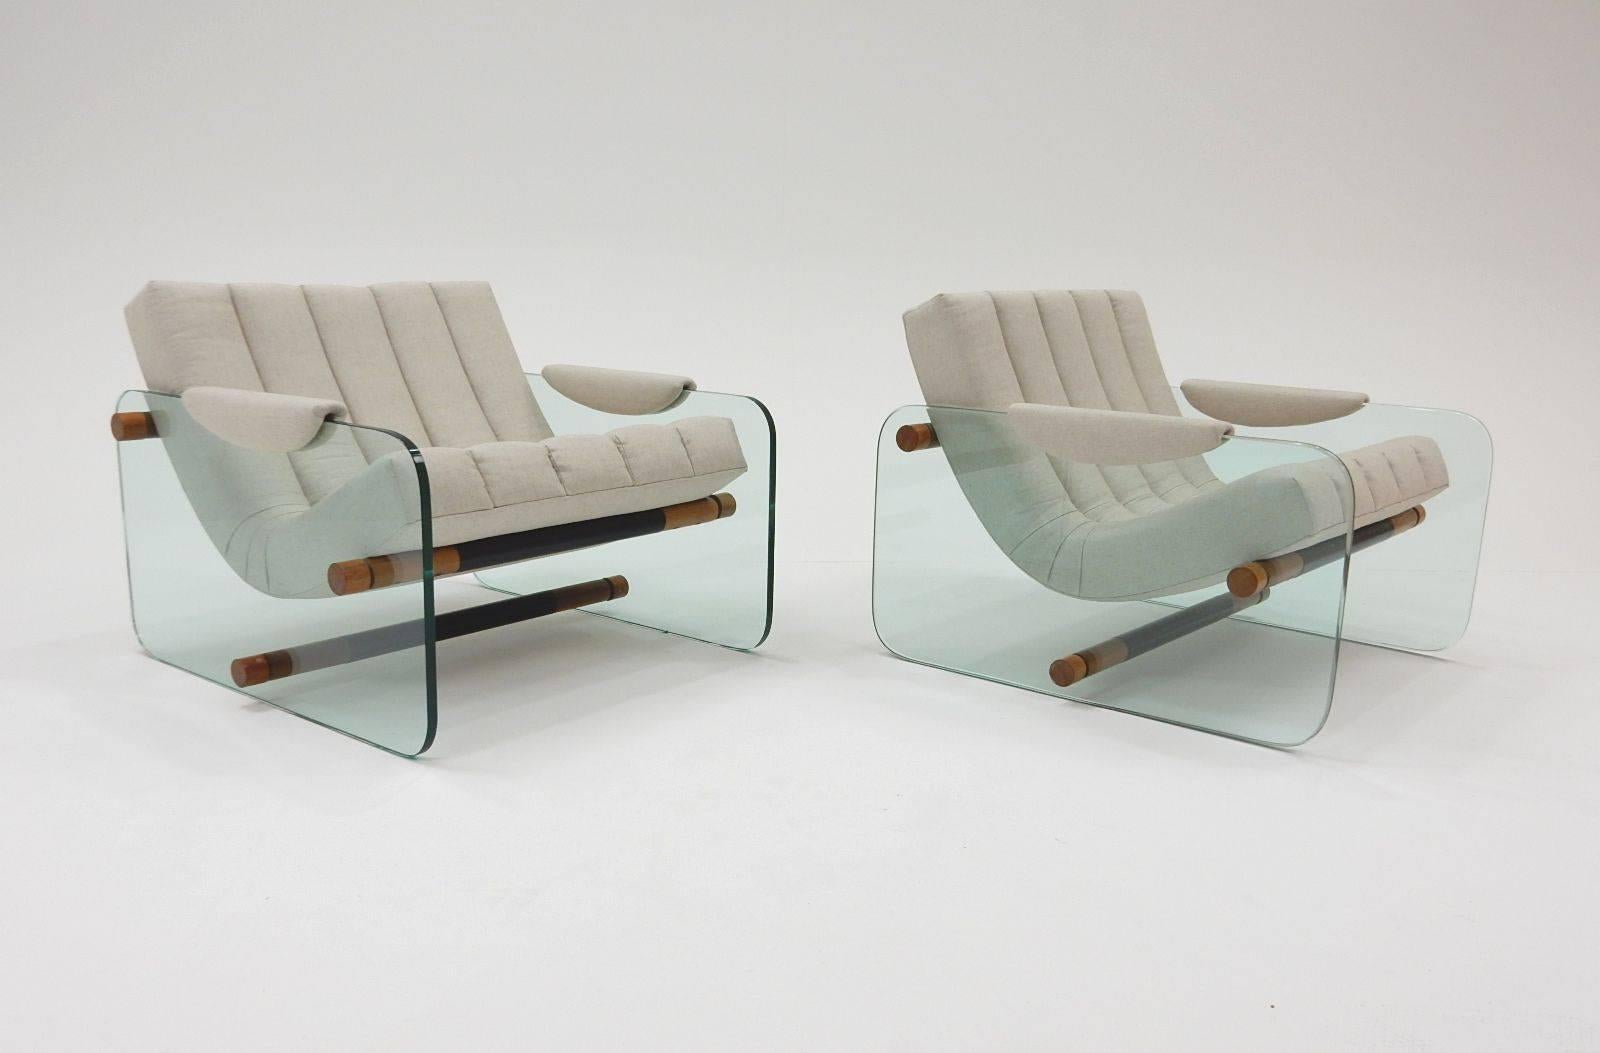 Late 20th Century Italian Glass Lounge Chairs Pair, in the style of Fabio Lenci, circa 1970